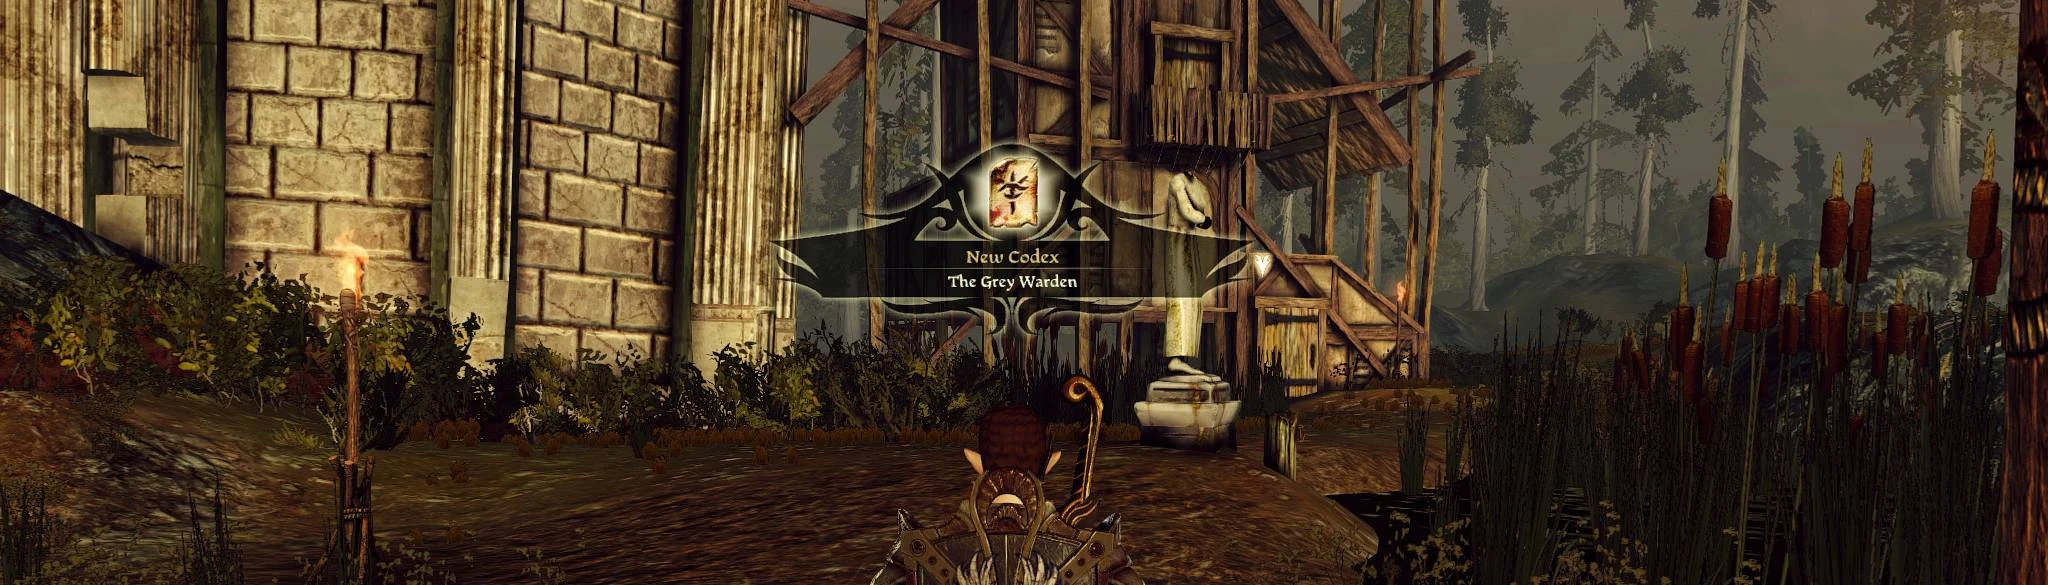 Dragon Age Origins - Golems of Amgarrak: Entering Amgarrak 